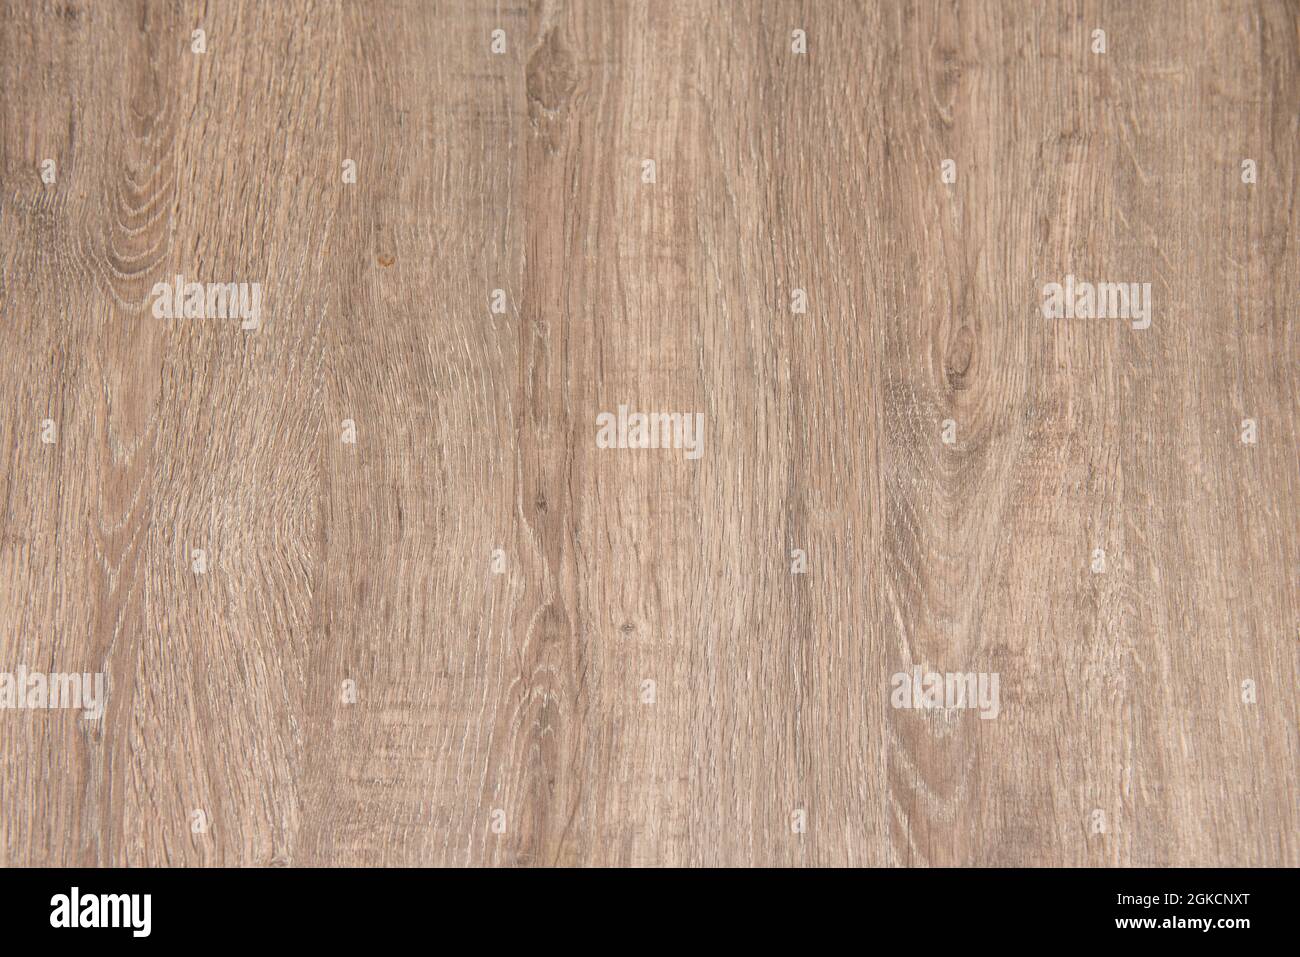 tapa de mesa de madera con tablones verticales cortos de madera de roble de tono semi claro. Vector textura de madera Stock Photo